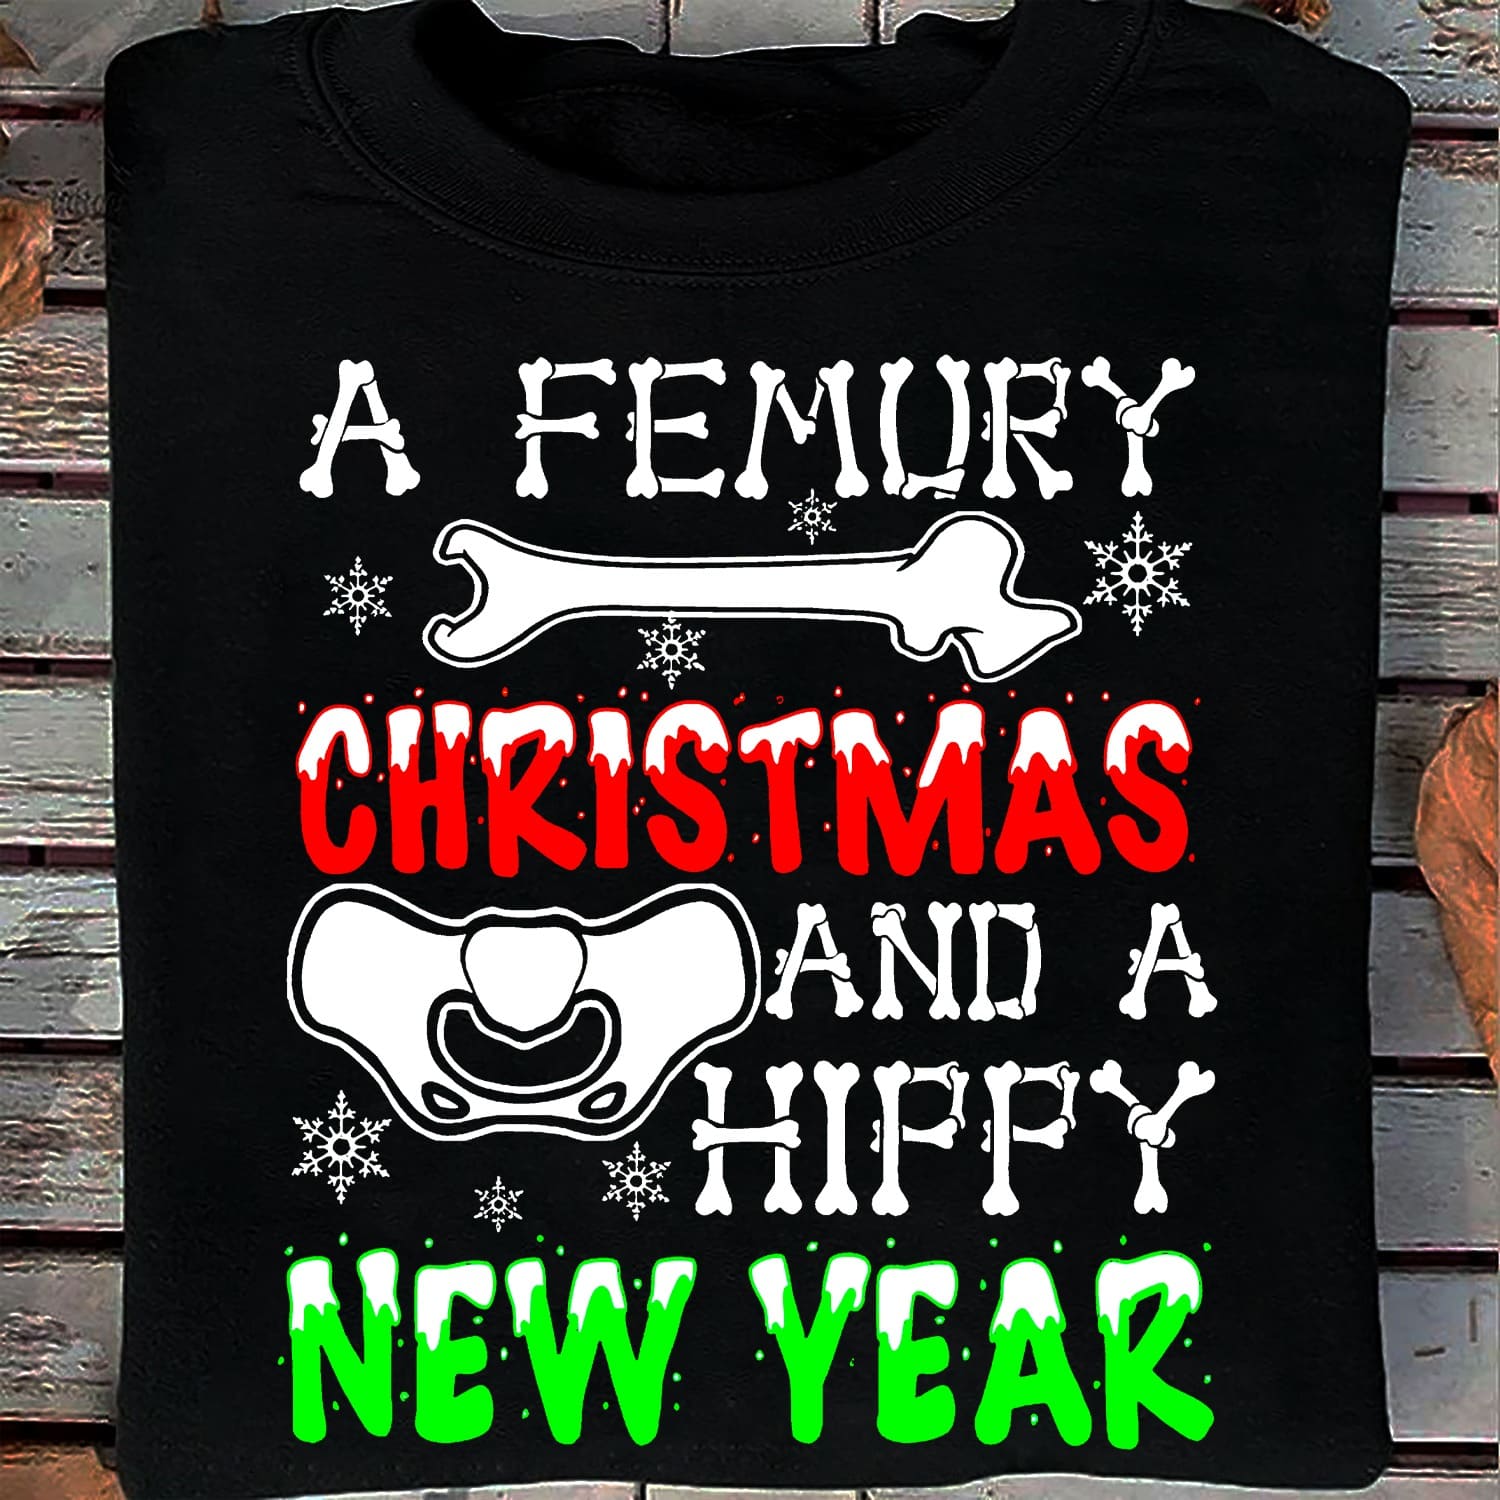 Human Femur Christmas Gift - A femury christmas and a hippy new year